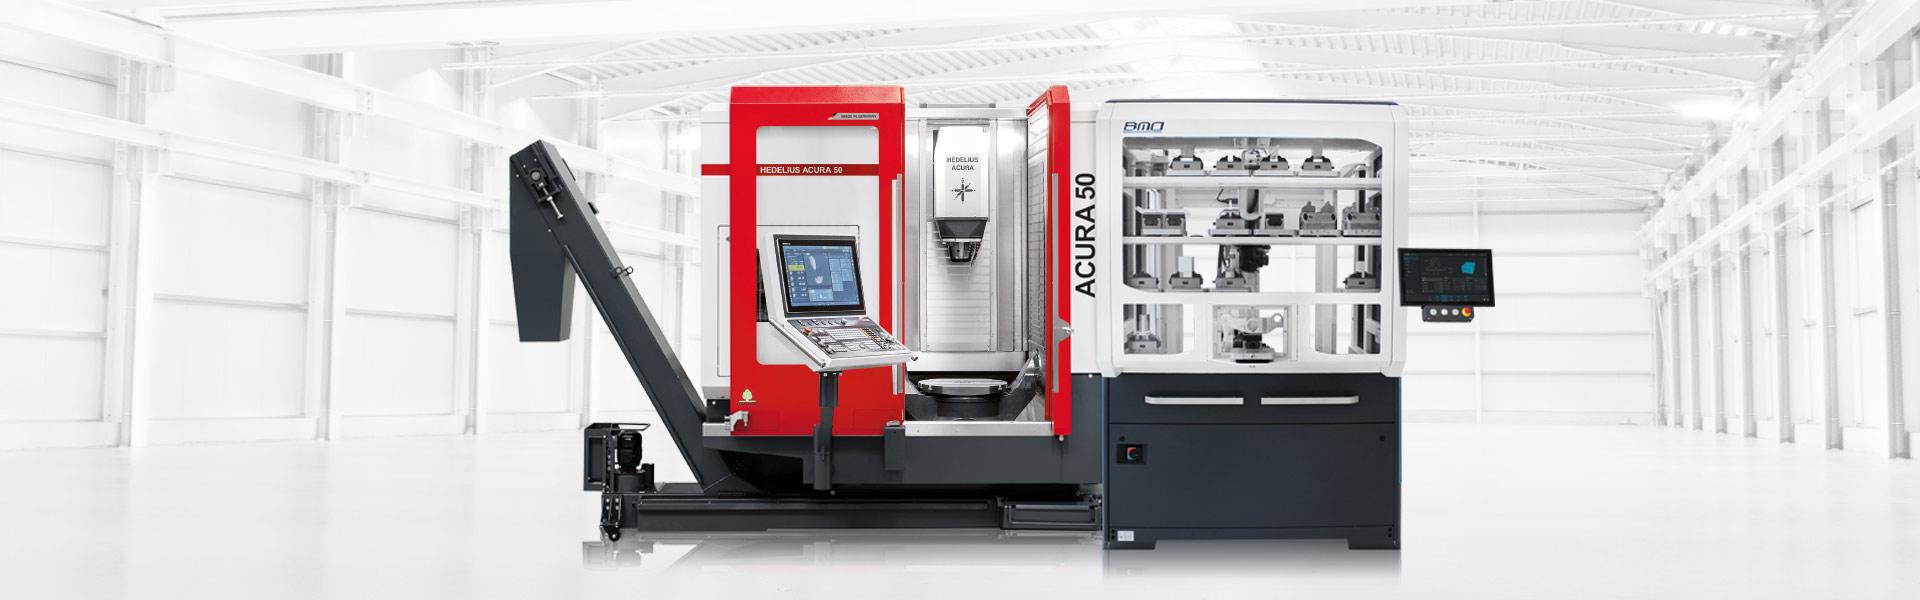 Roboterautomationsanlage BMO Iridium Hybrid mit Bearbeitungszentrum ACURA 50 EL